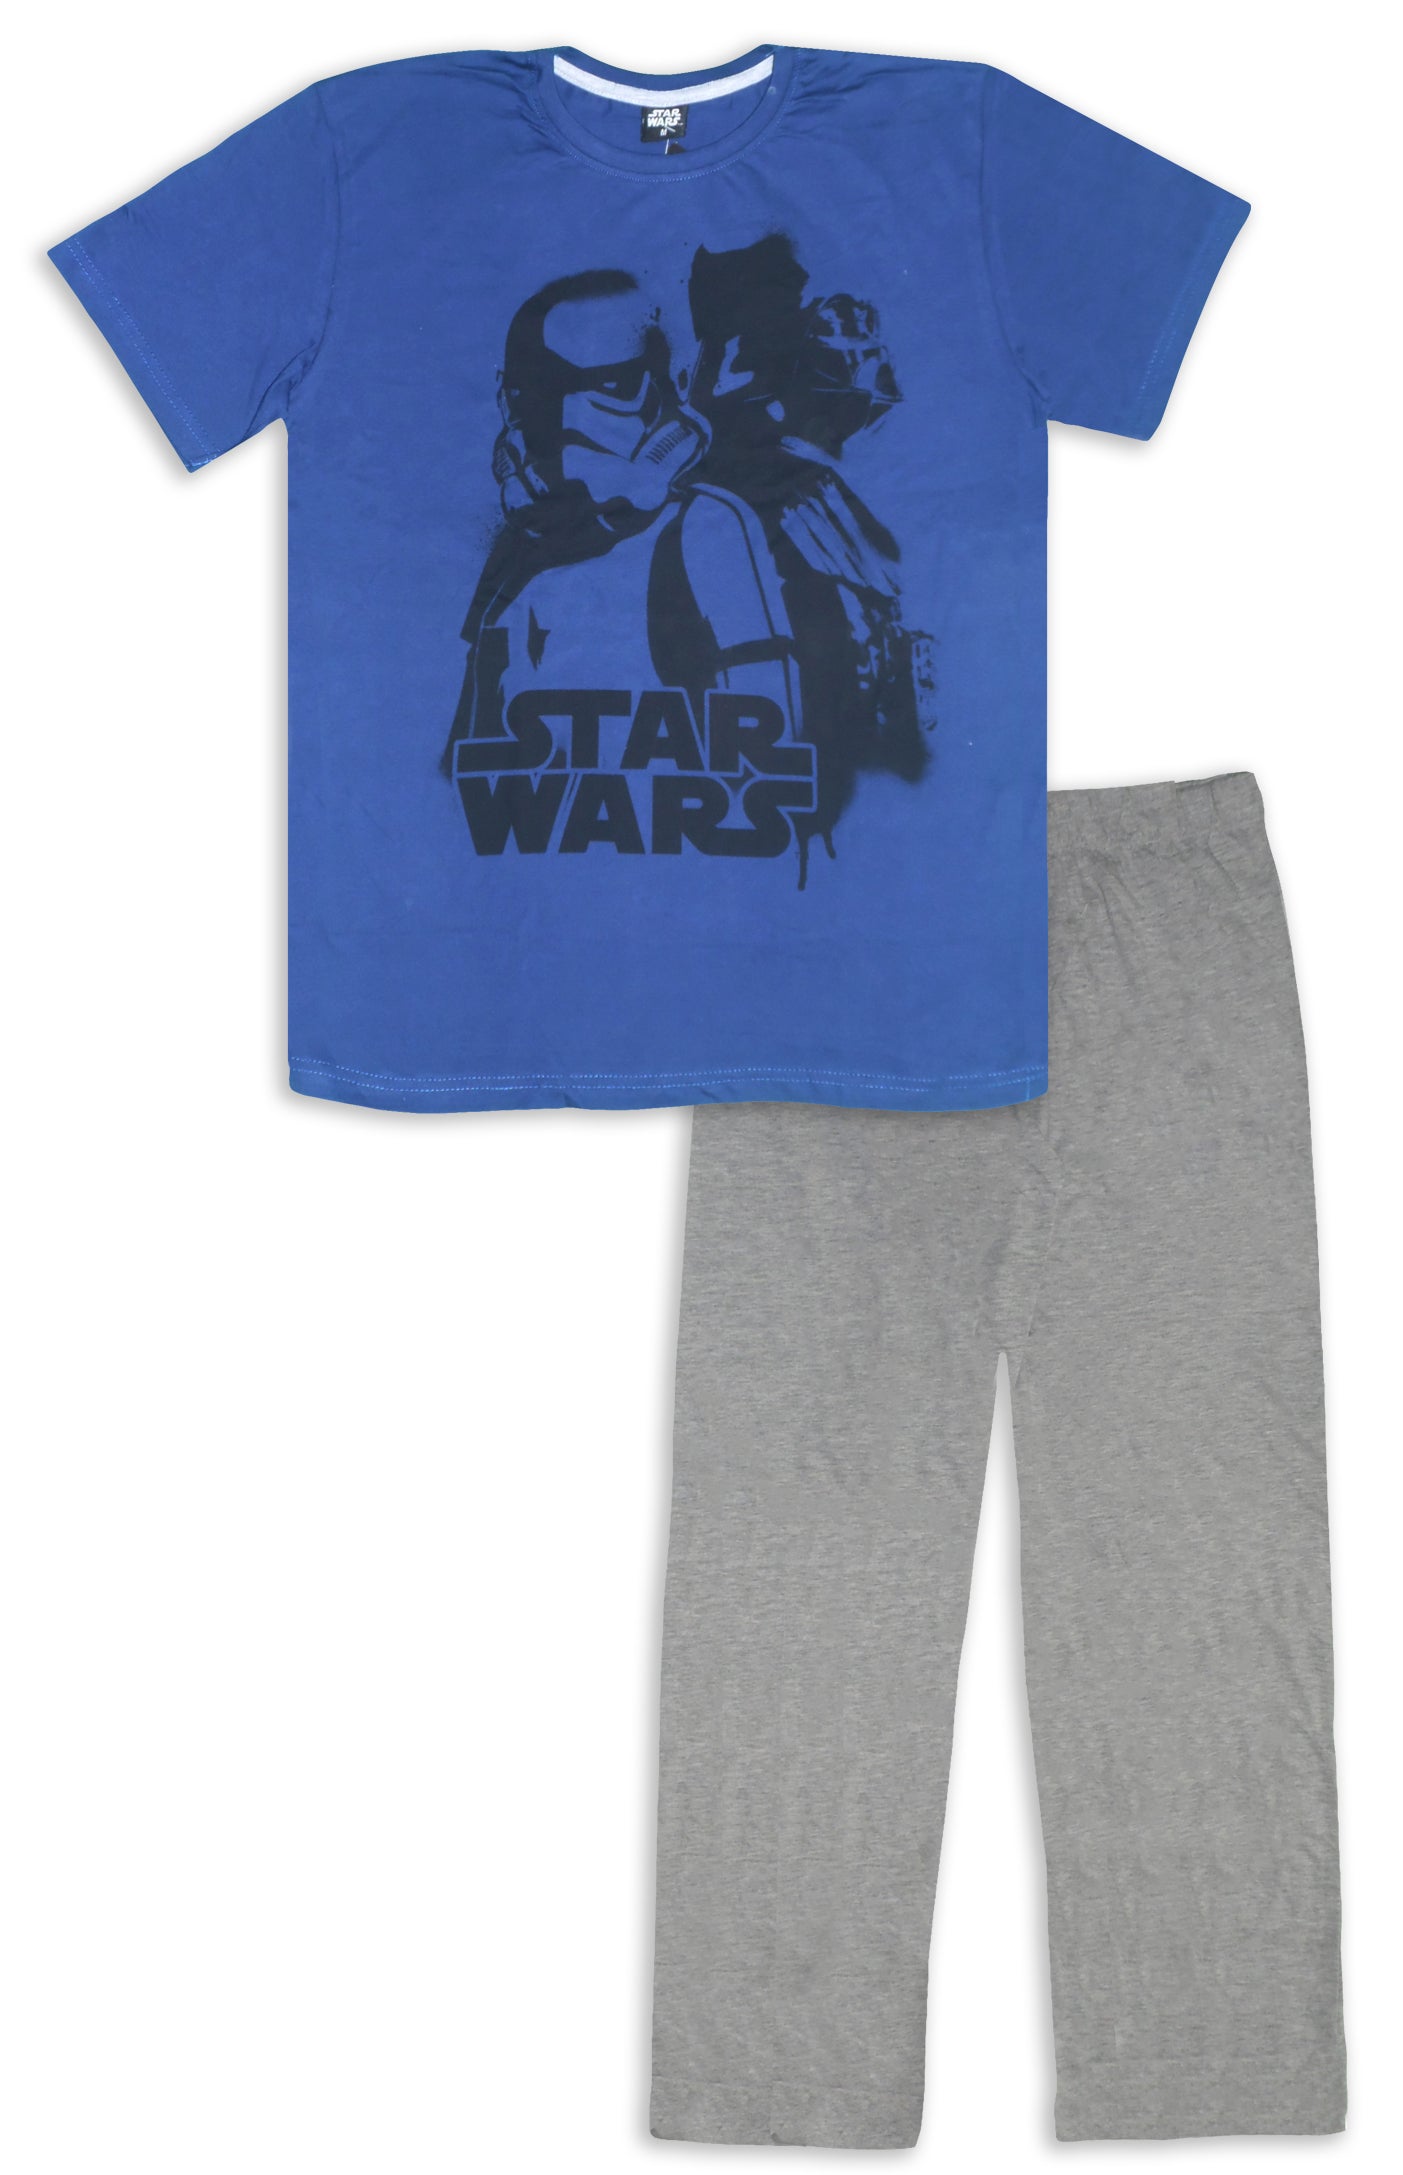 Official Star Wars Mens Long Pyjama Set